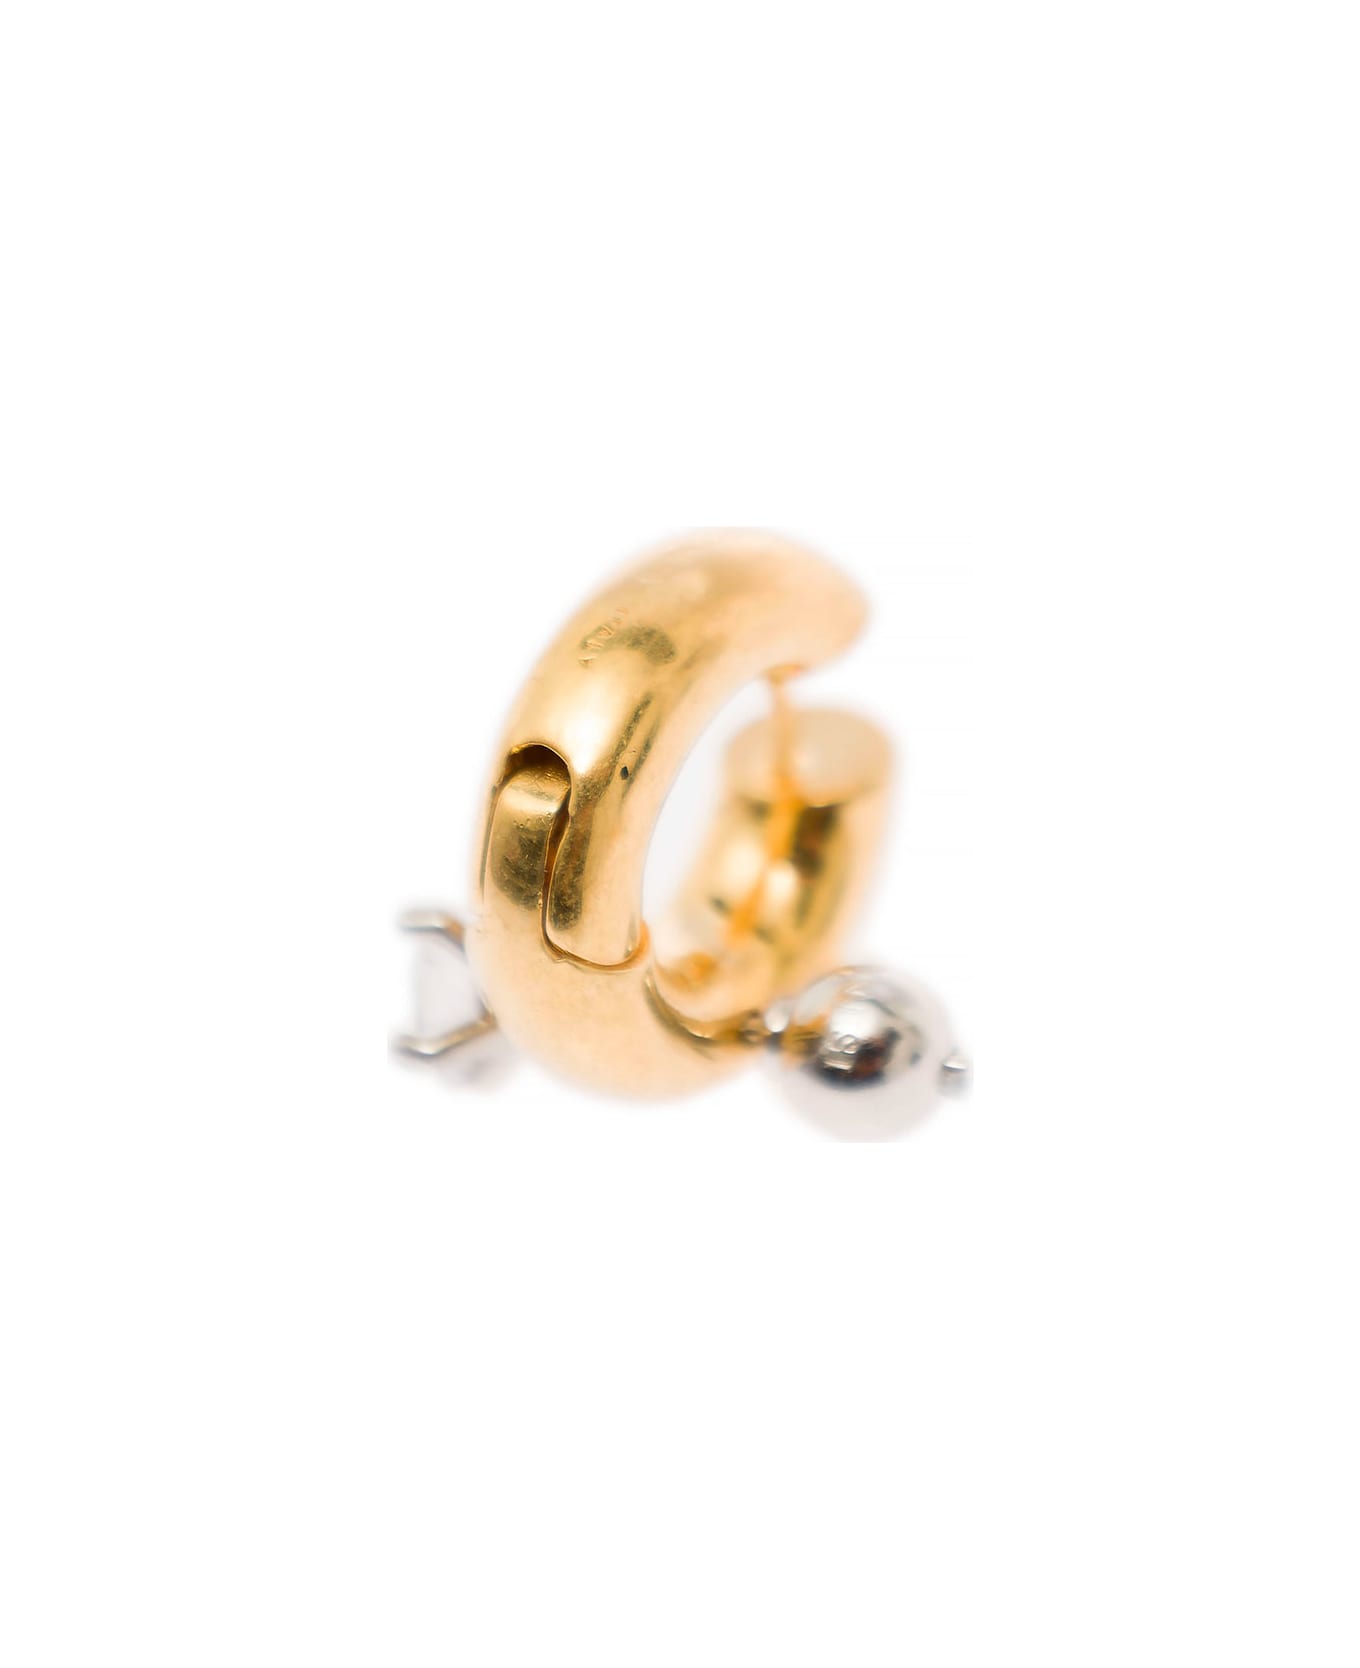 Panconesi Gold Tone Hoops Earrings With Zircons In Gold Plated Brass Woman - Metallic